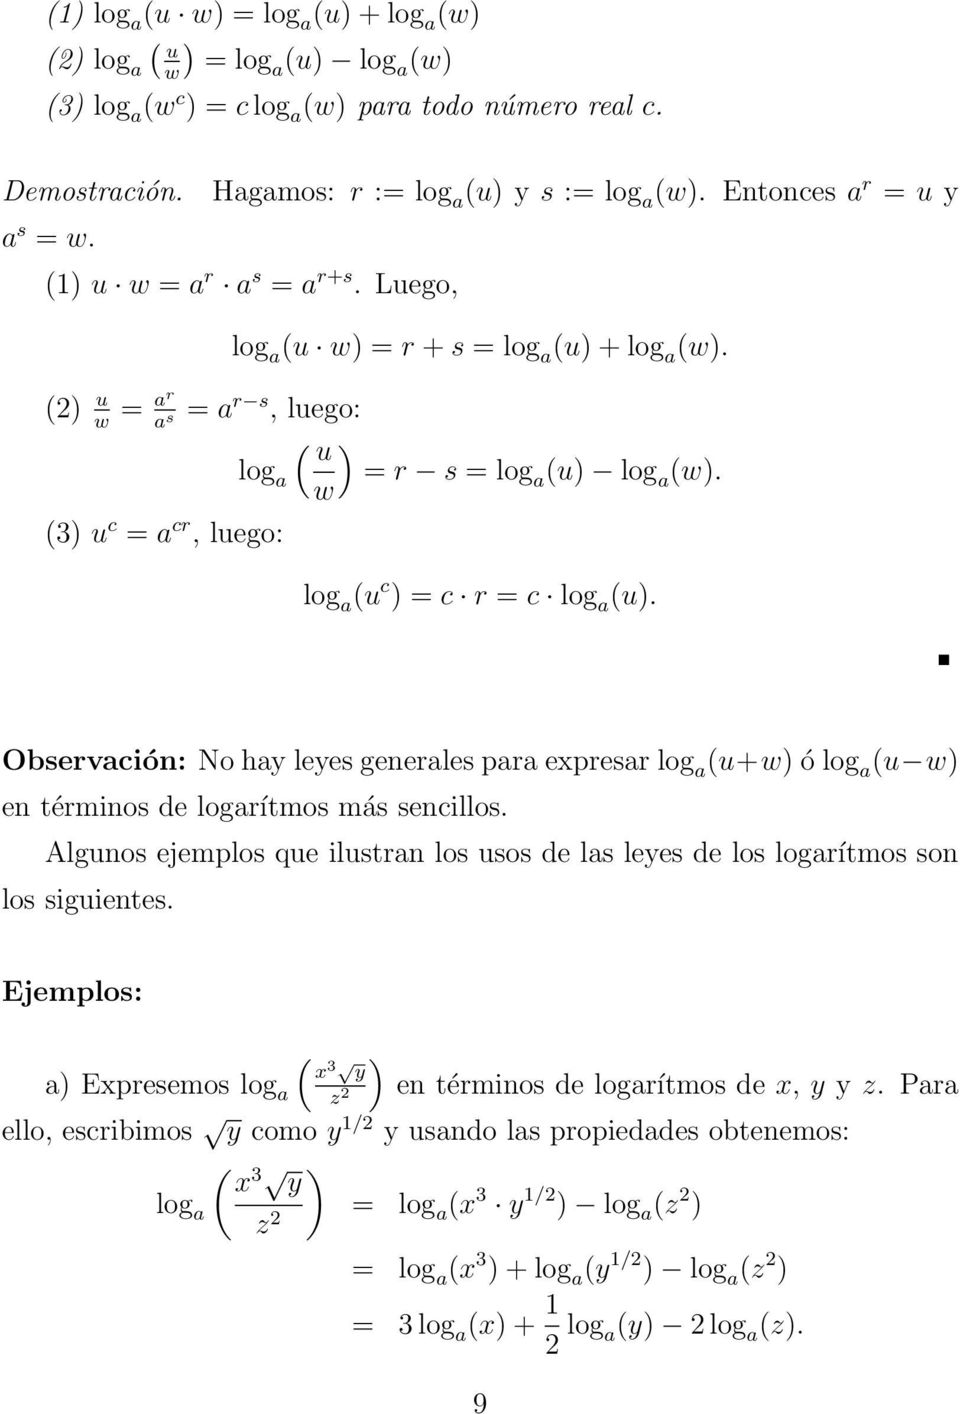 log a (u c ) = c r = c log a (u). Observación: No hay leyes generales para expresar log a (u+w) ó log a (u w) en términos de logarítmos más sencillos.